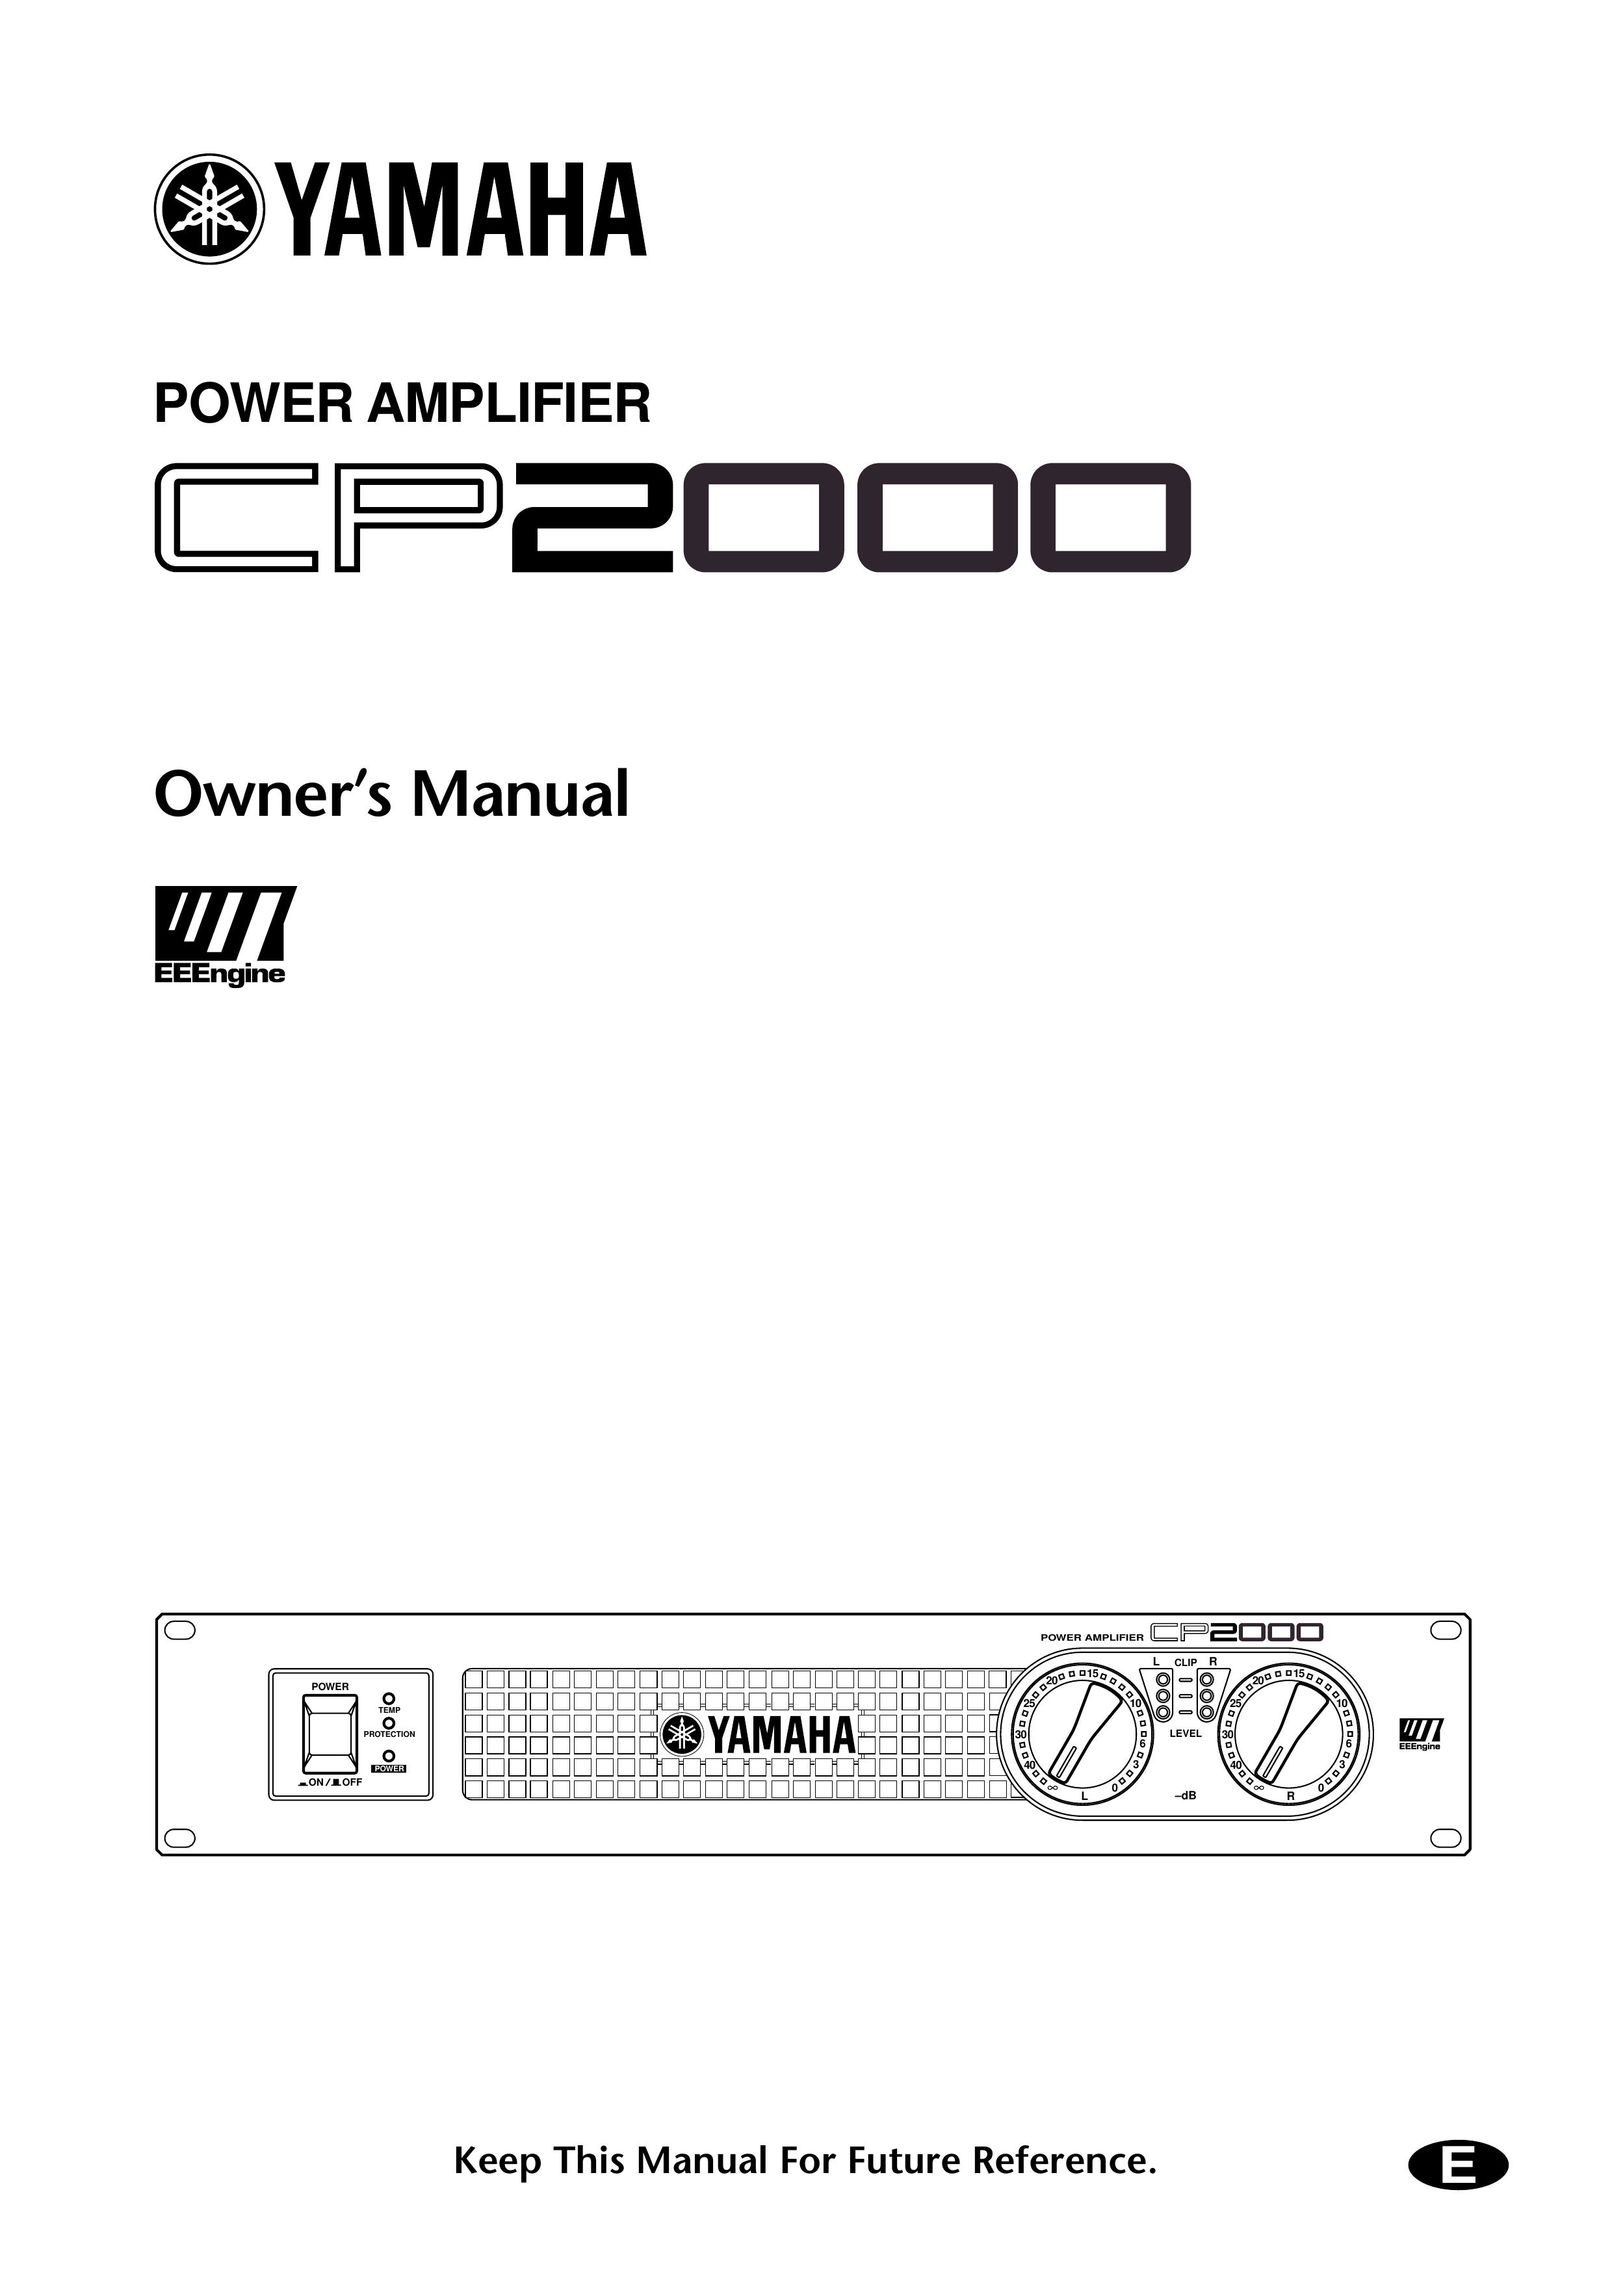 Yamaha CP2000 Stereo Amplifier User Manual